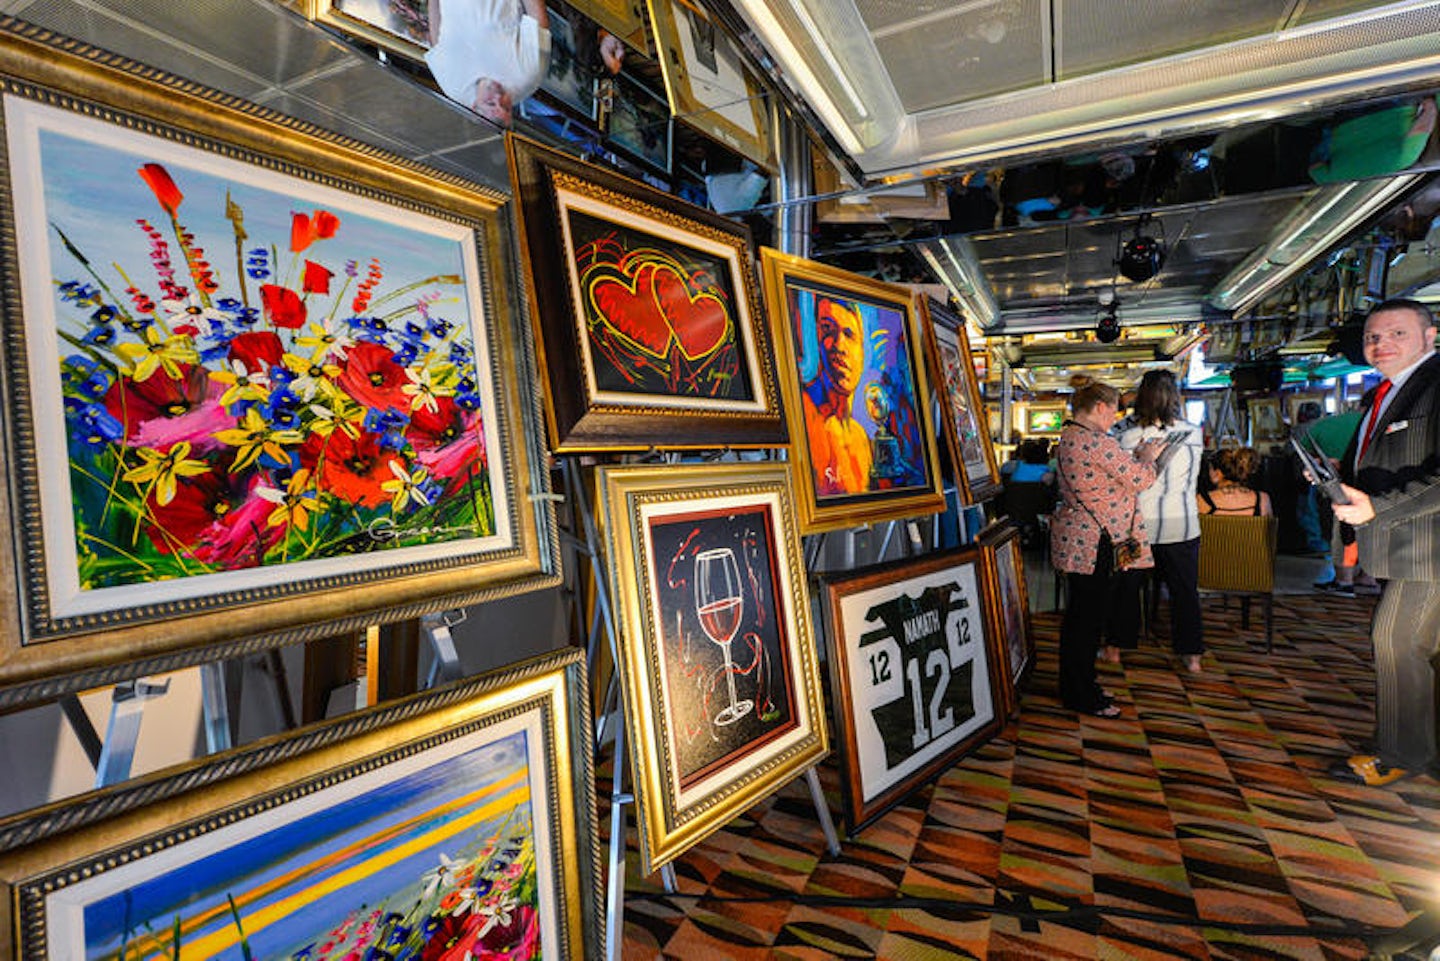 cruise art auctions